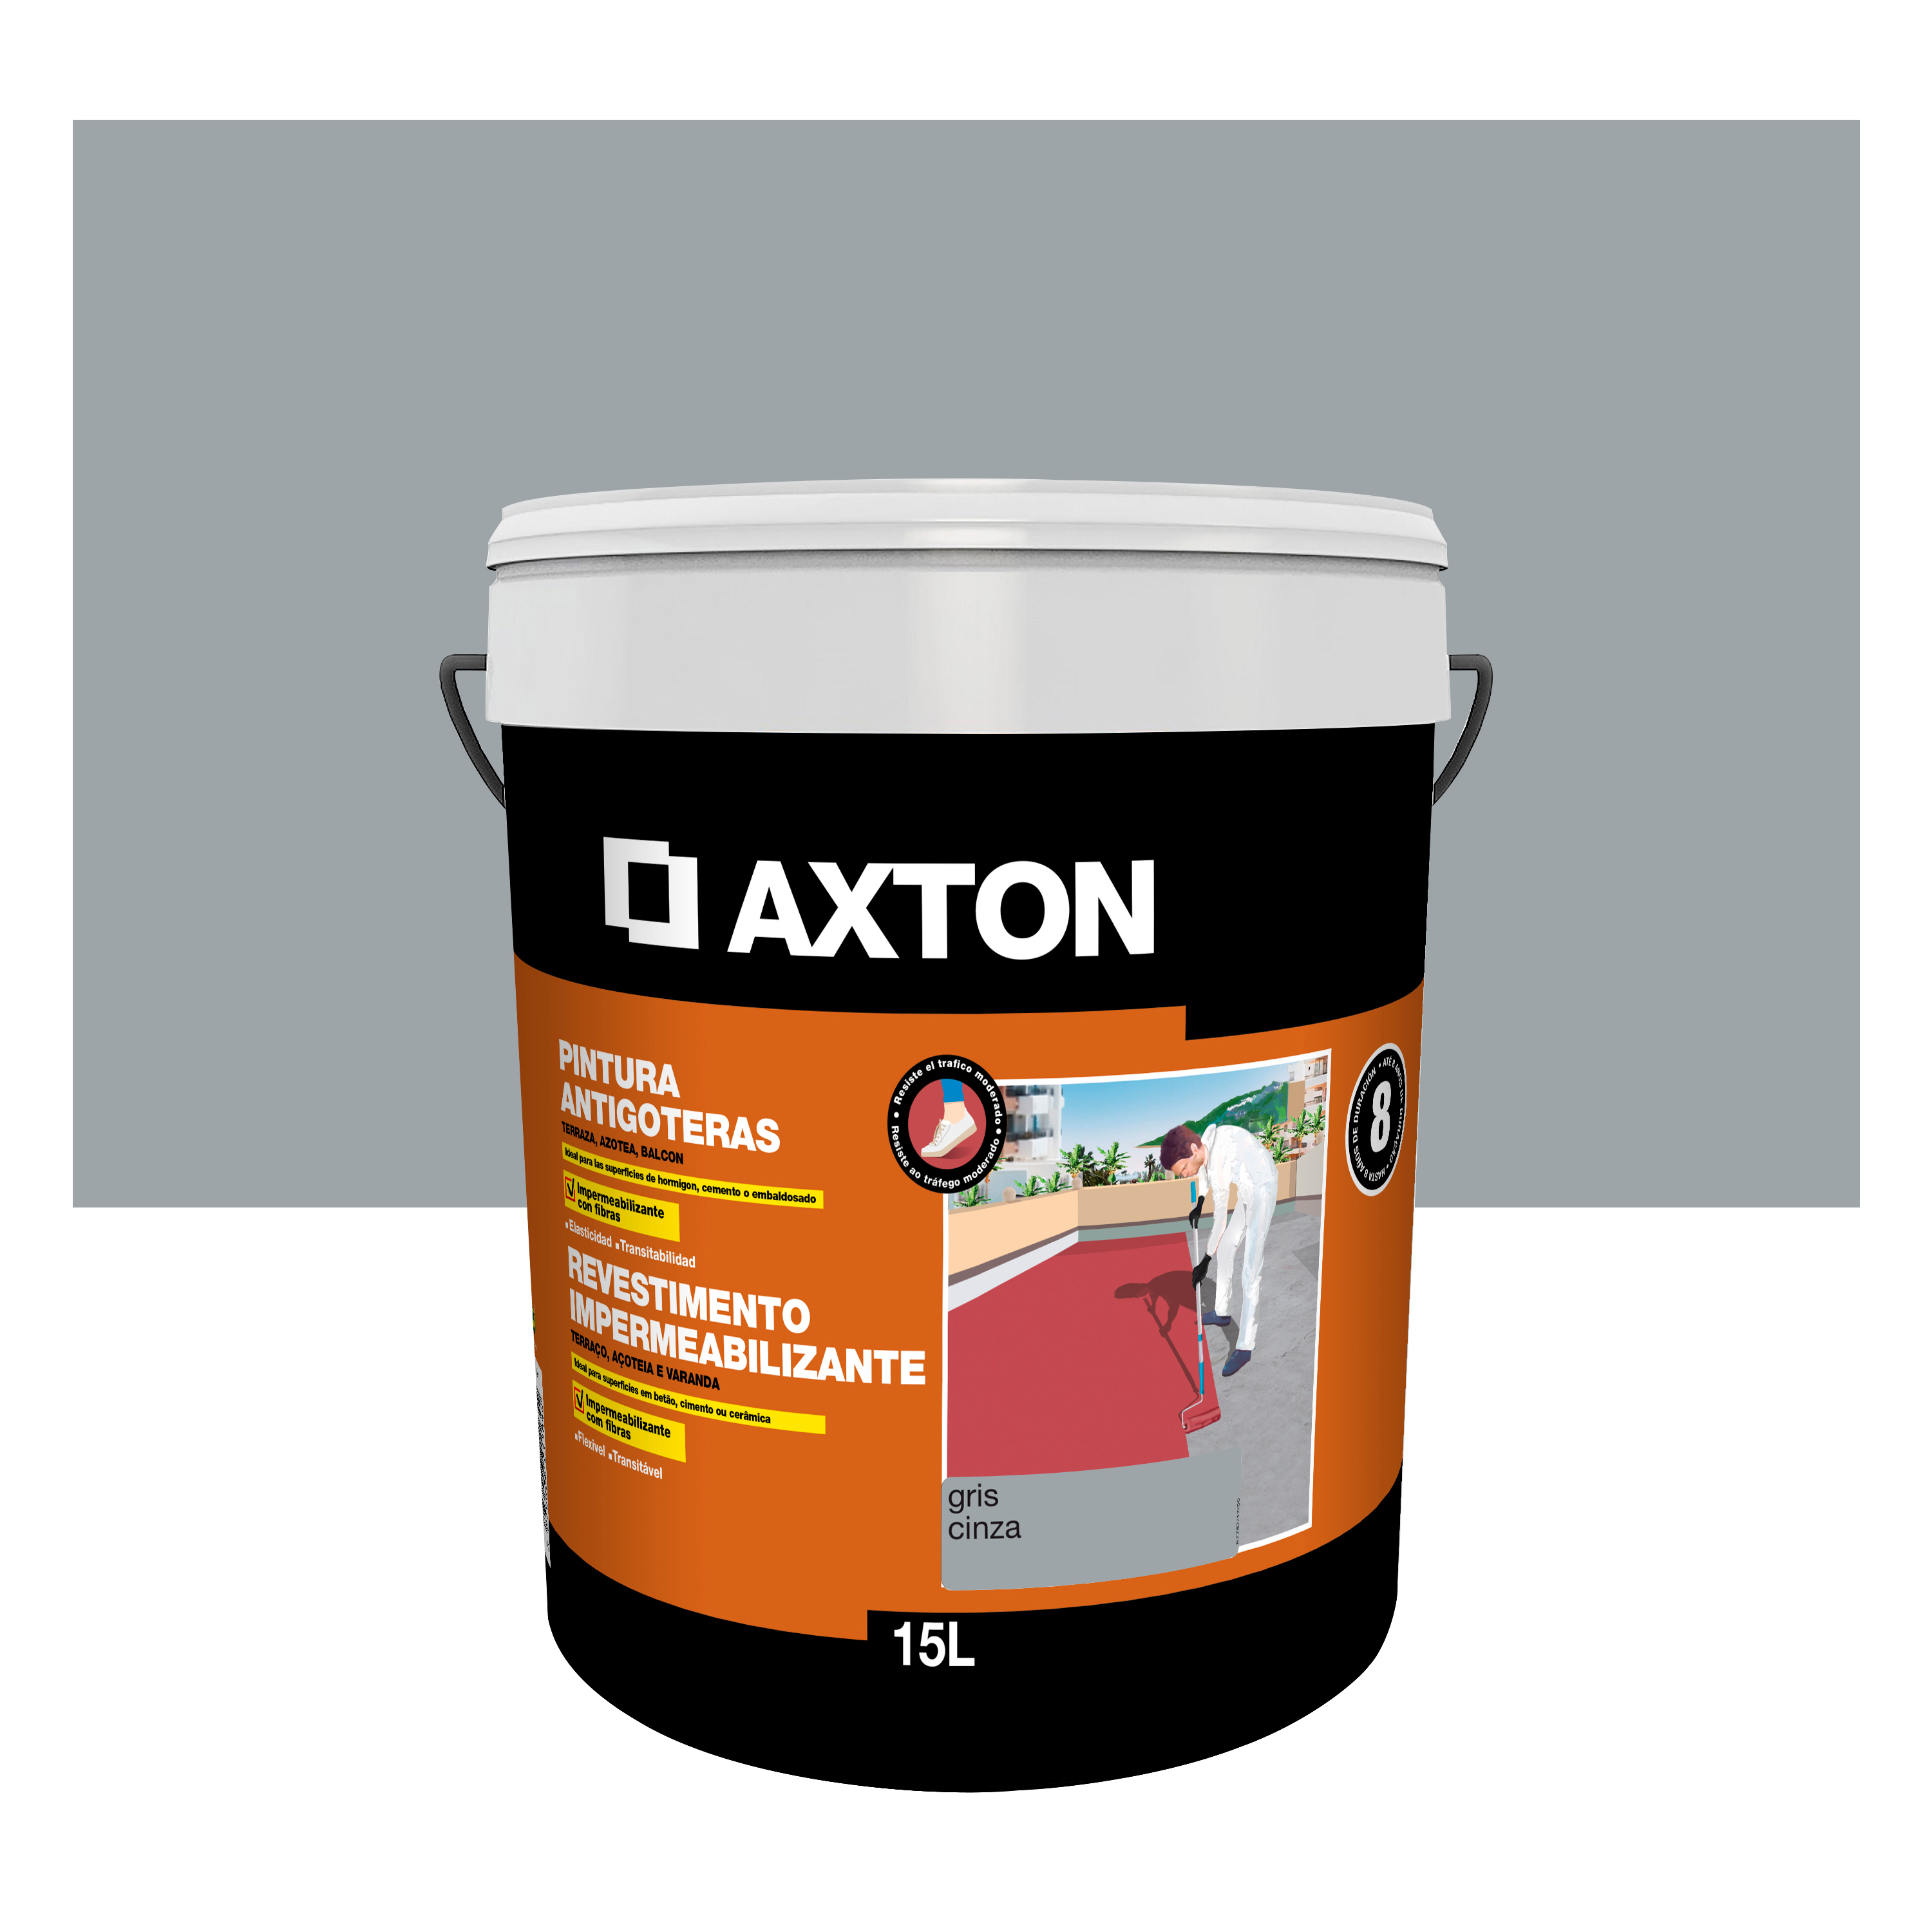 Pintura impermeabilizante AXTON 4L gris